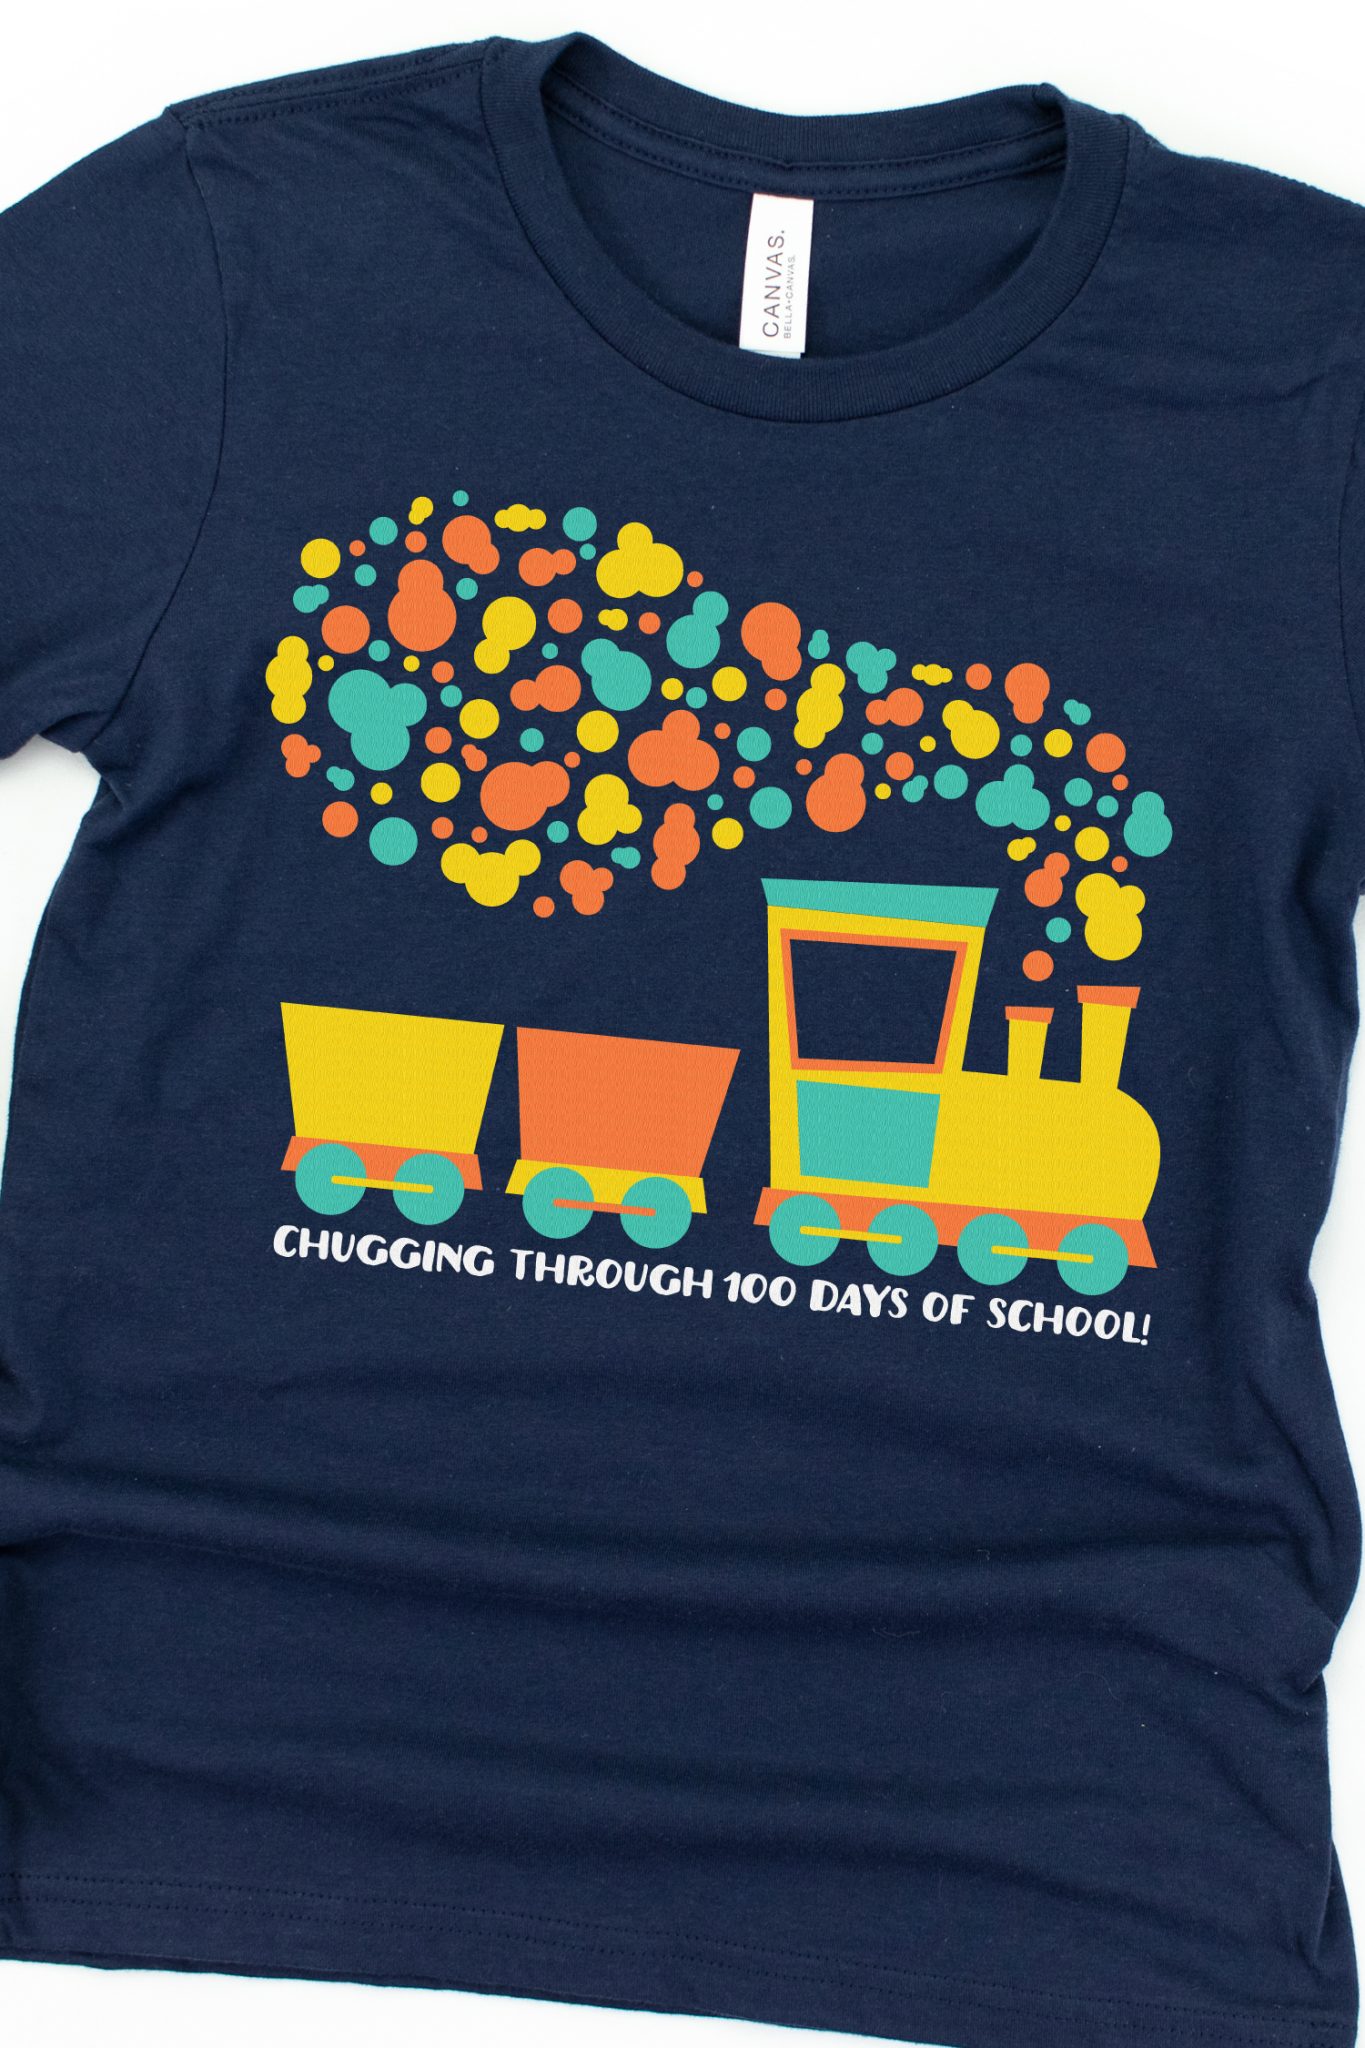 teacher shirt, 100 days smarter colorful unisex raglan shirt